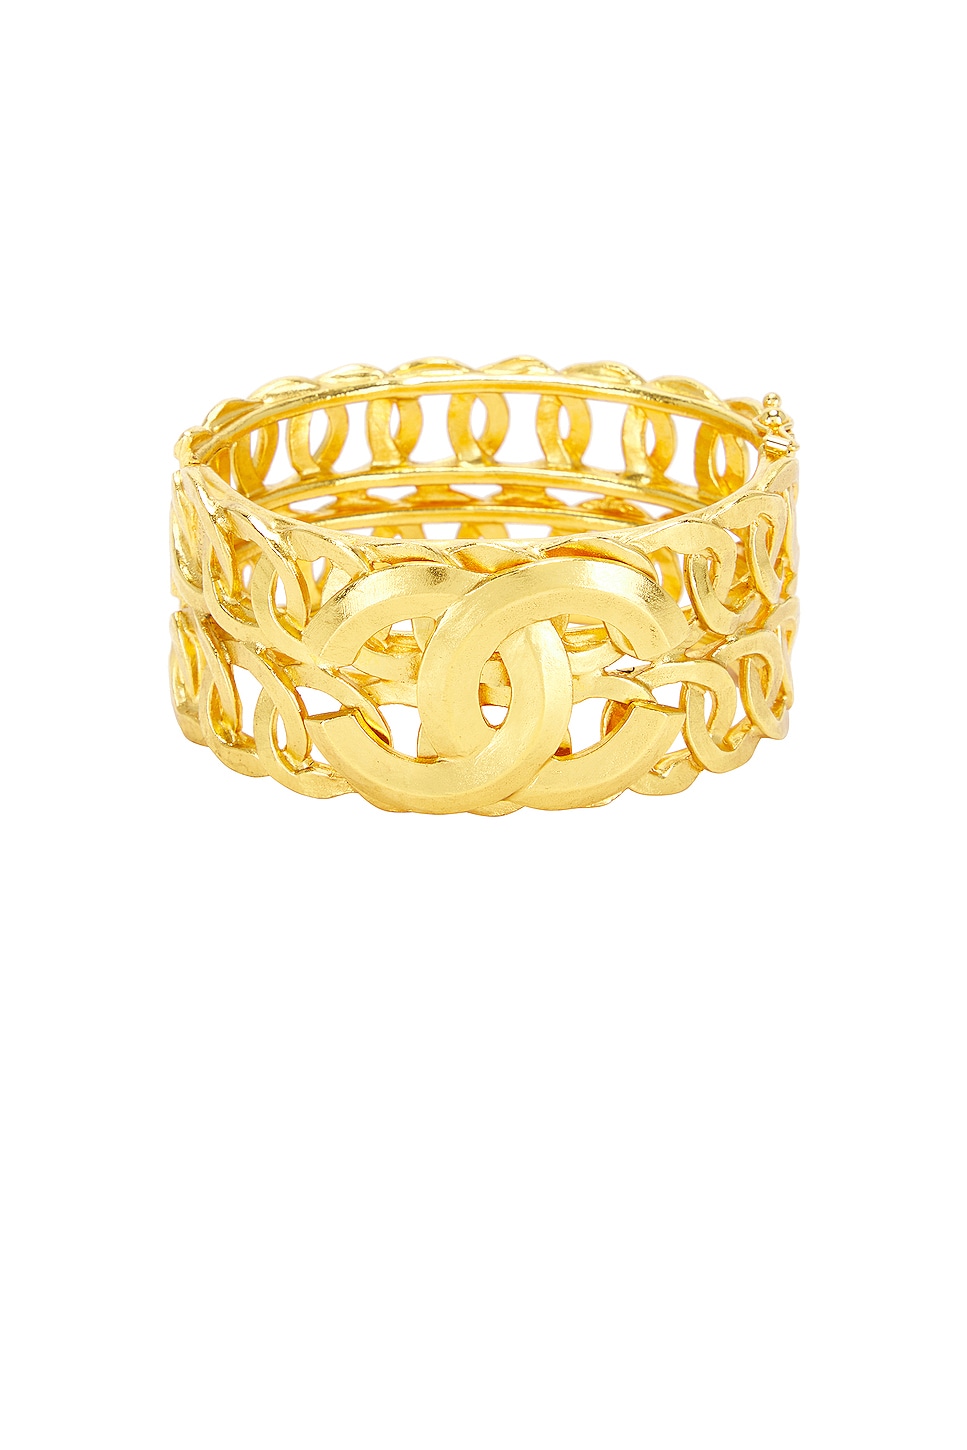 Image 1 of FWRD Renew Chanel 1996 CC Hinge Bangle Bracelet in Gold